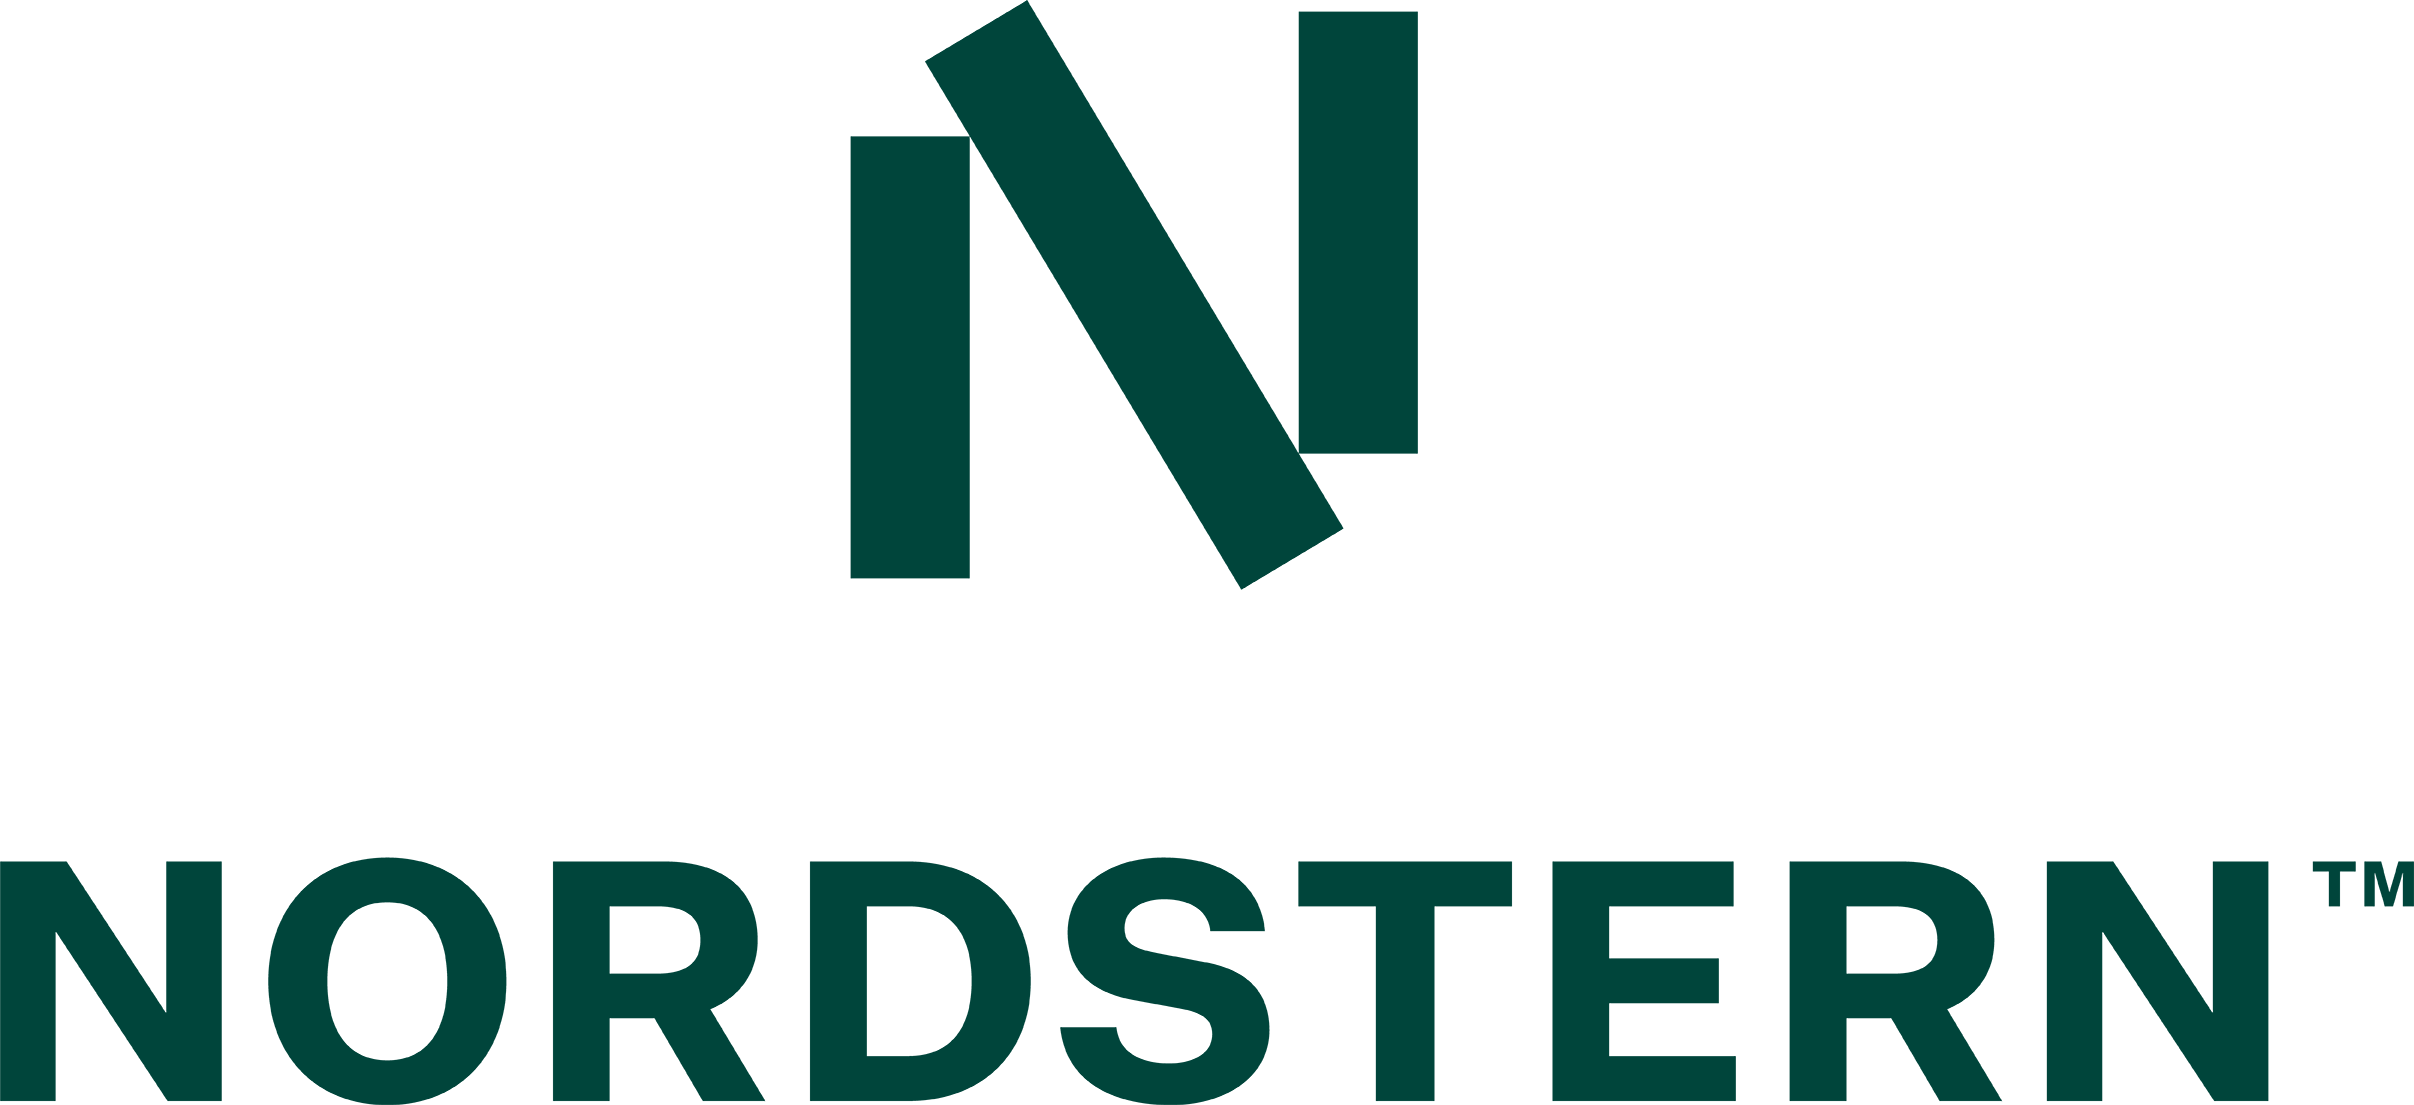 Nordstern_Lock-up_Vertikal_Green_RGB